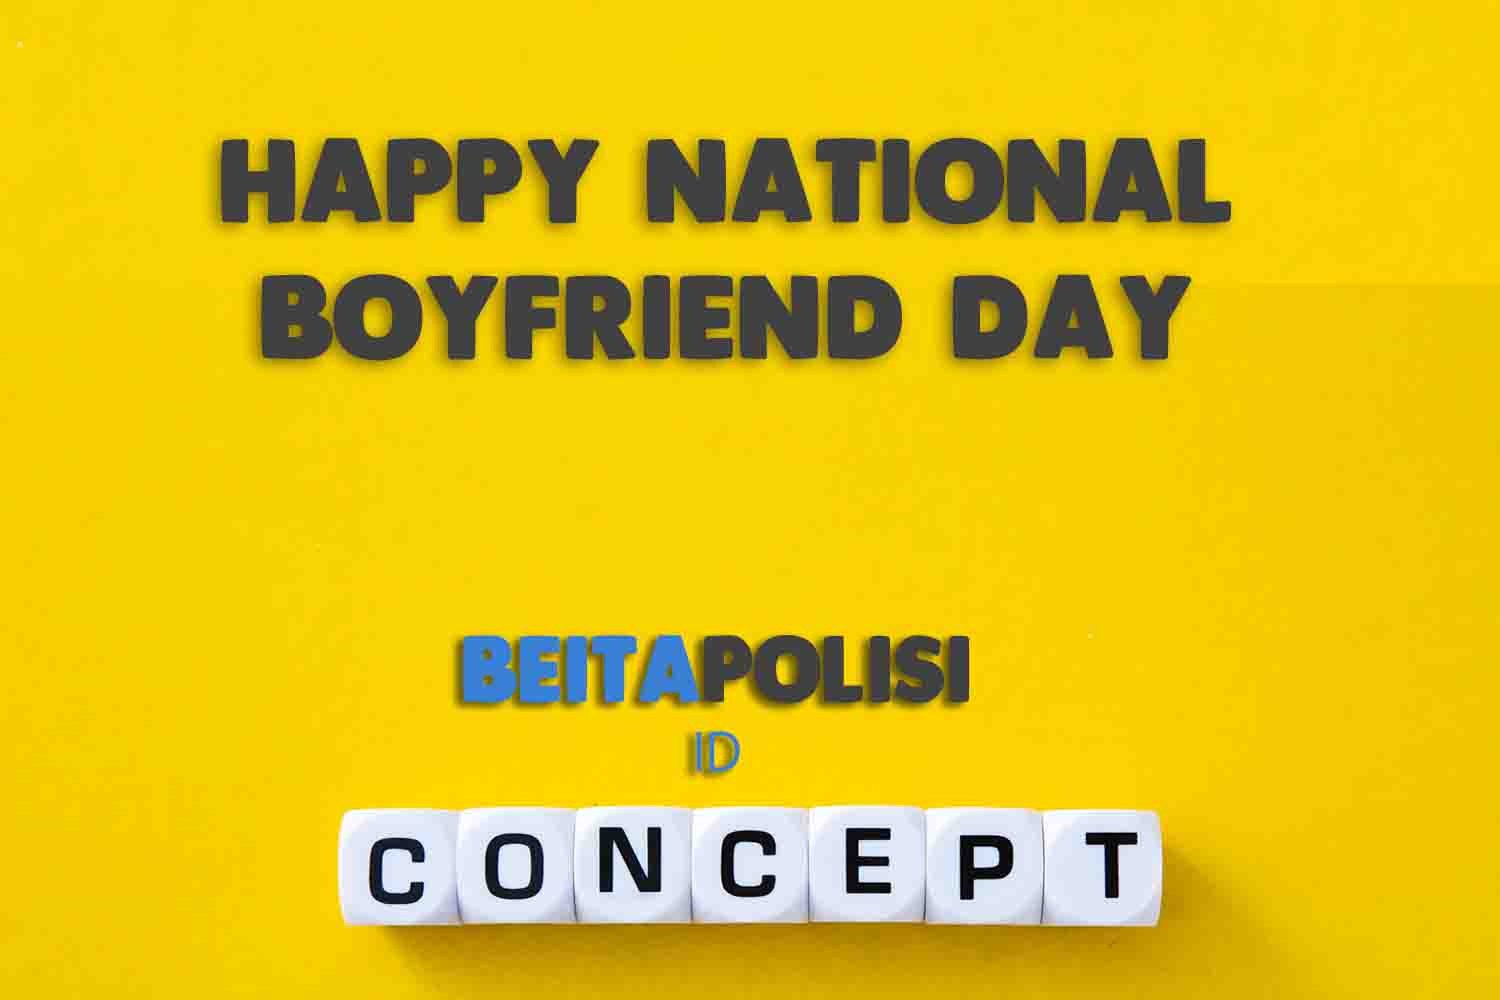 Happy National Boyfriend Day Artinya Apa Moment Yang Istimewa